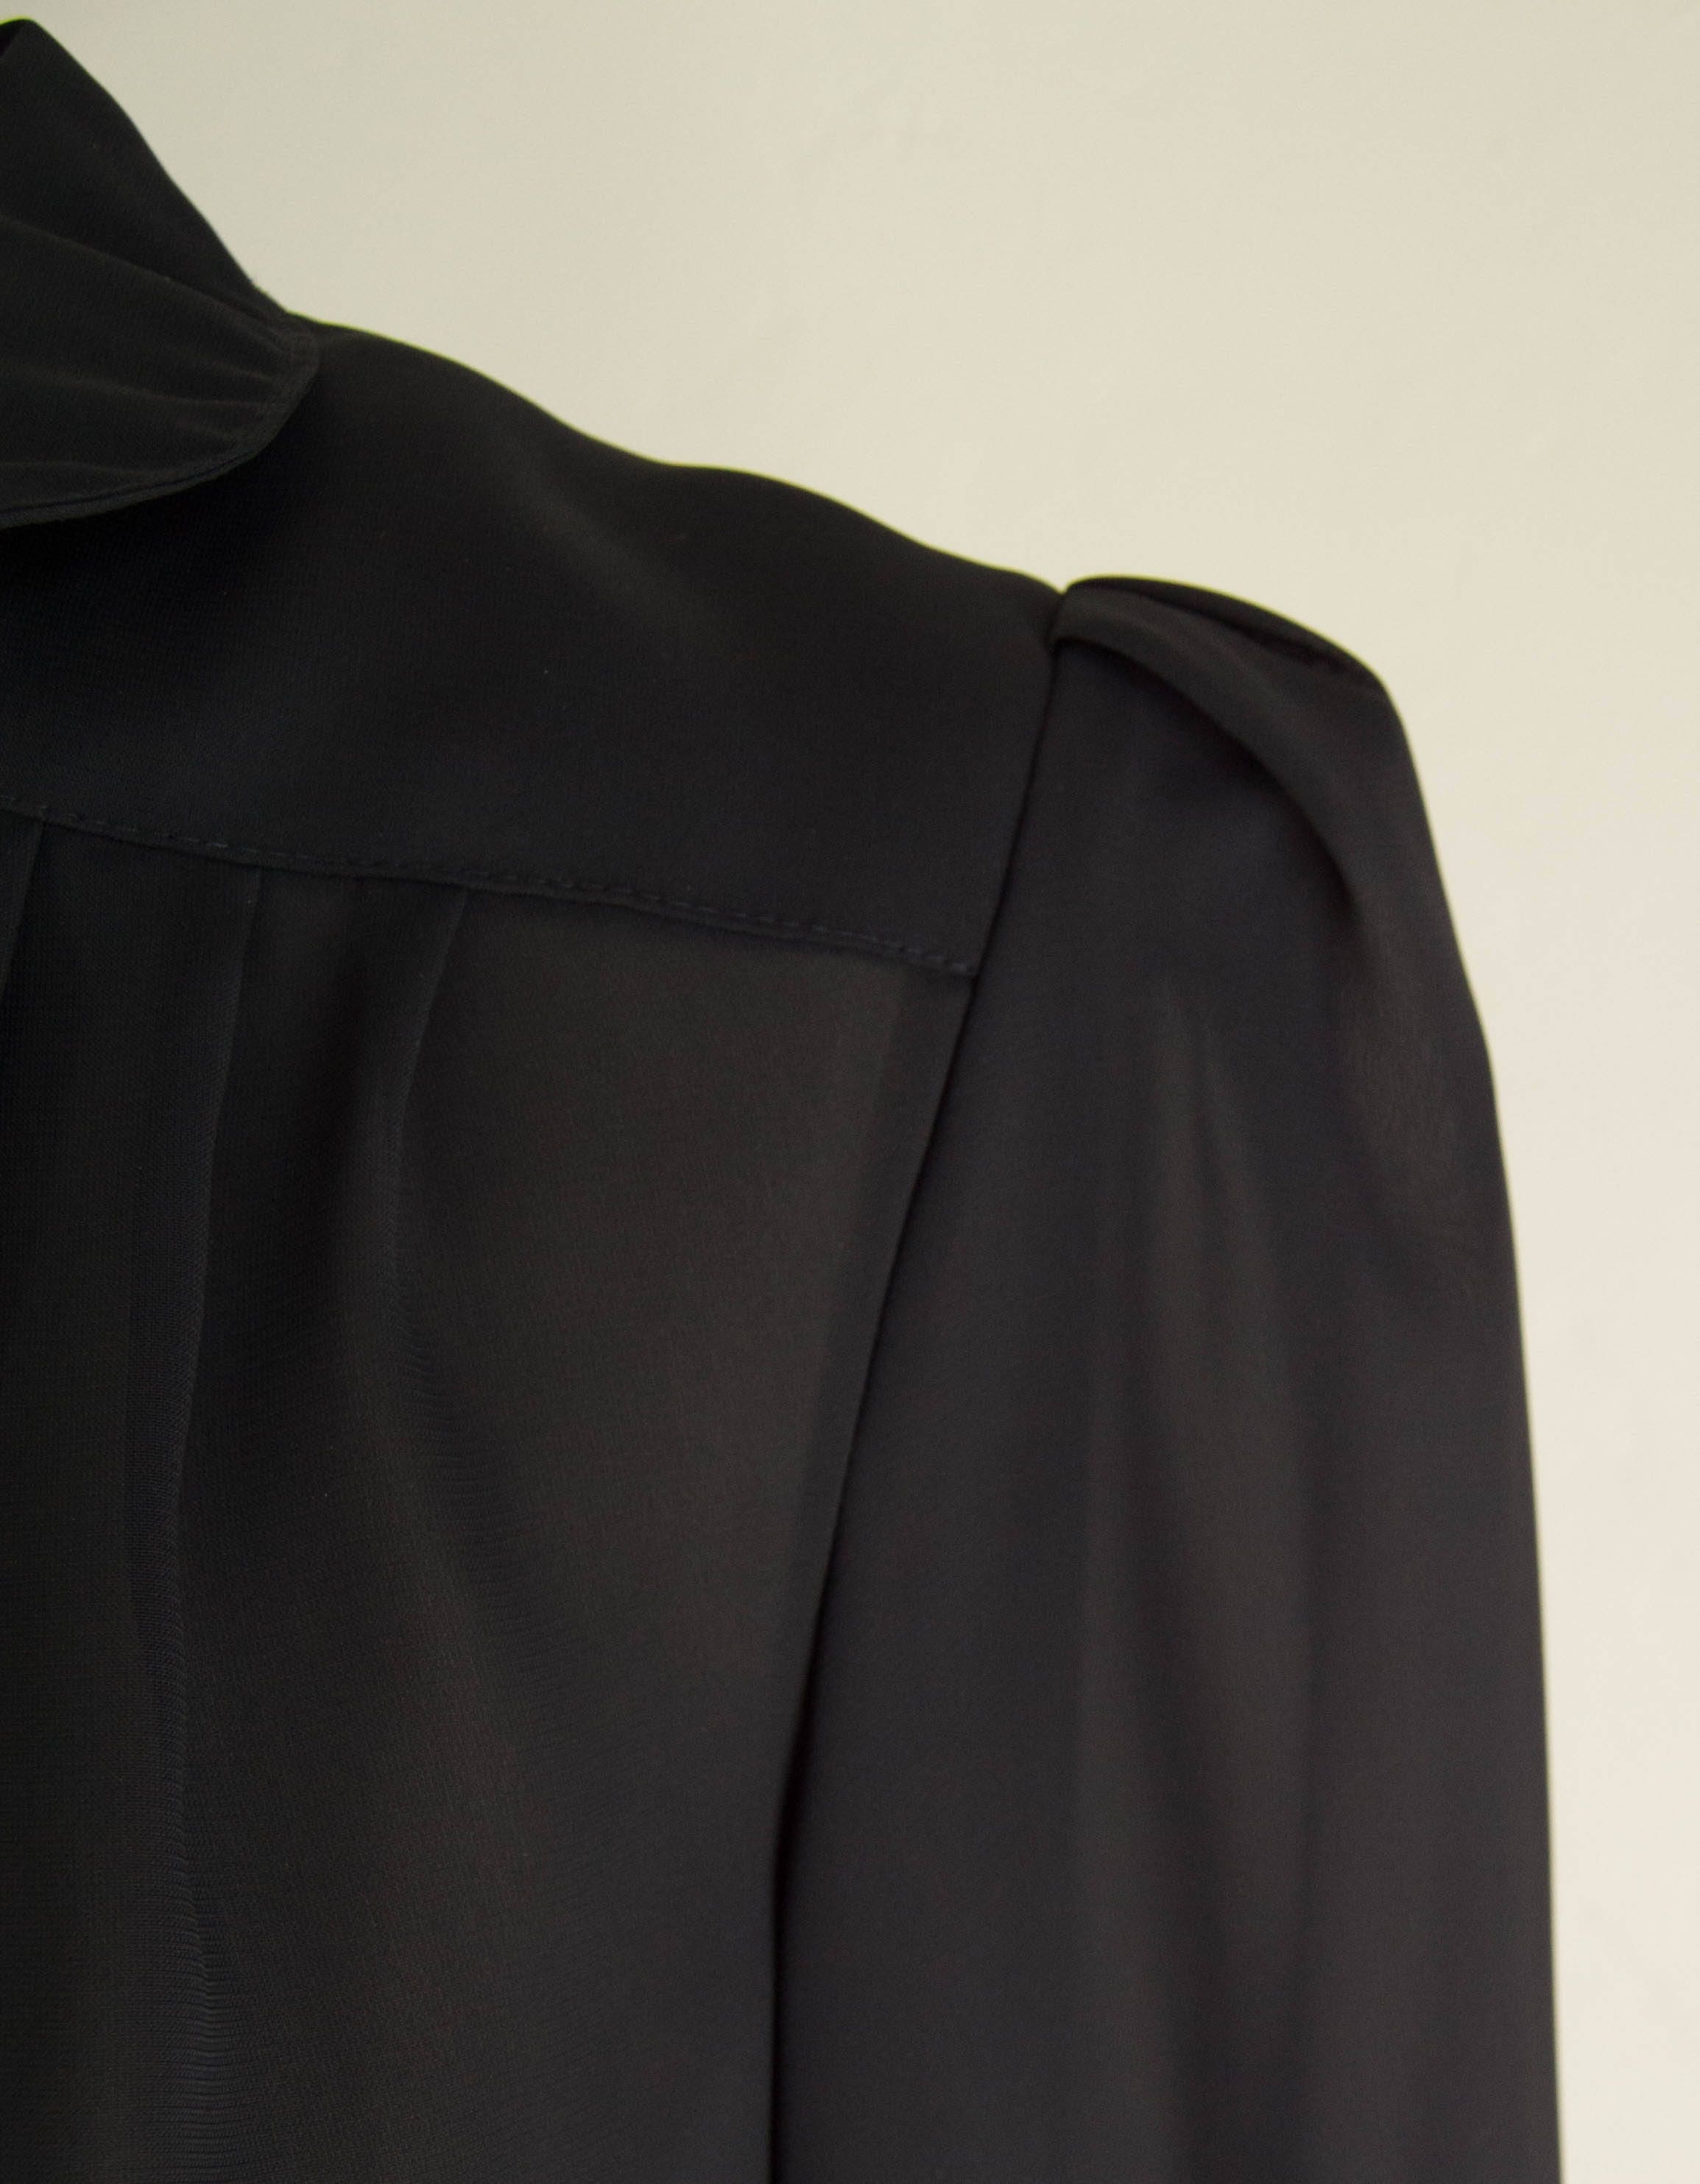 Vintage Sheer Black 80's Secretary Style Dress | Etsy